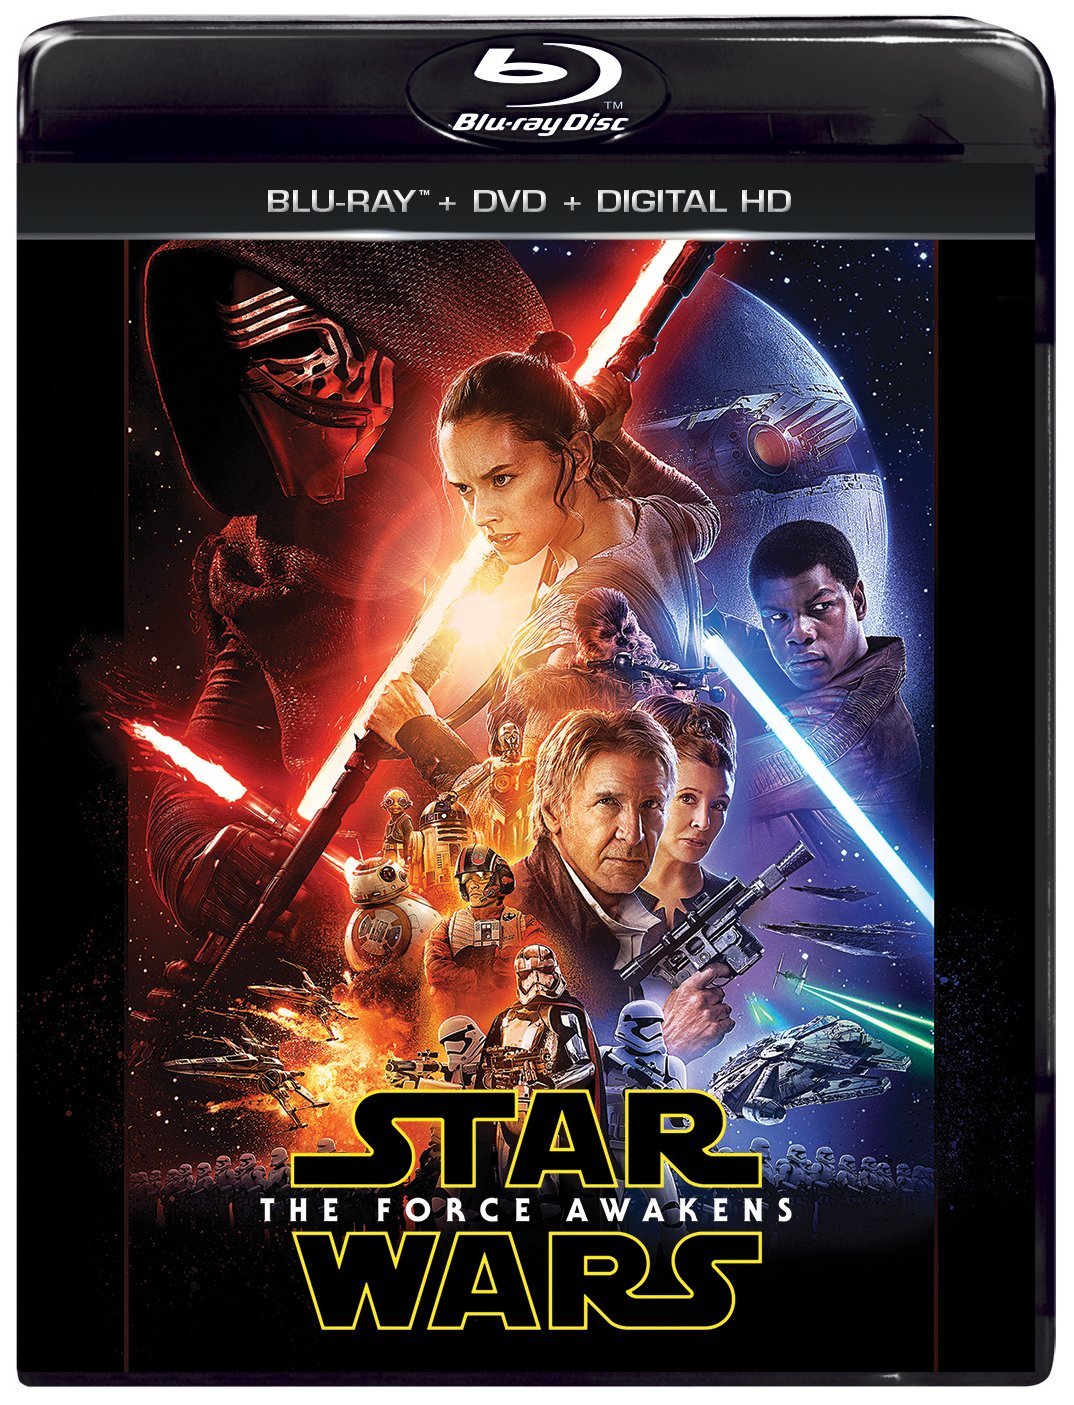 force awakens bray Watch: John Boyega Boards The Millennium Falcon Star Wars: The Force Awakens Bonus Feature